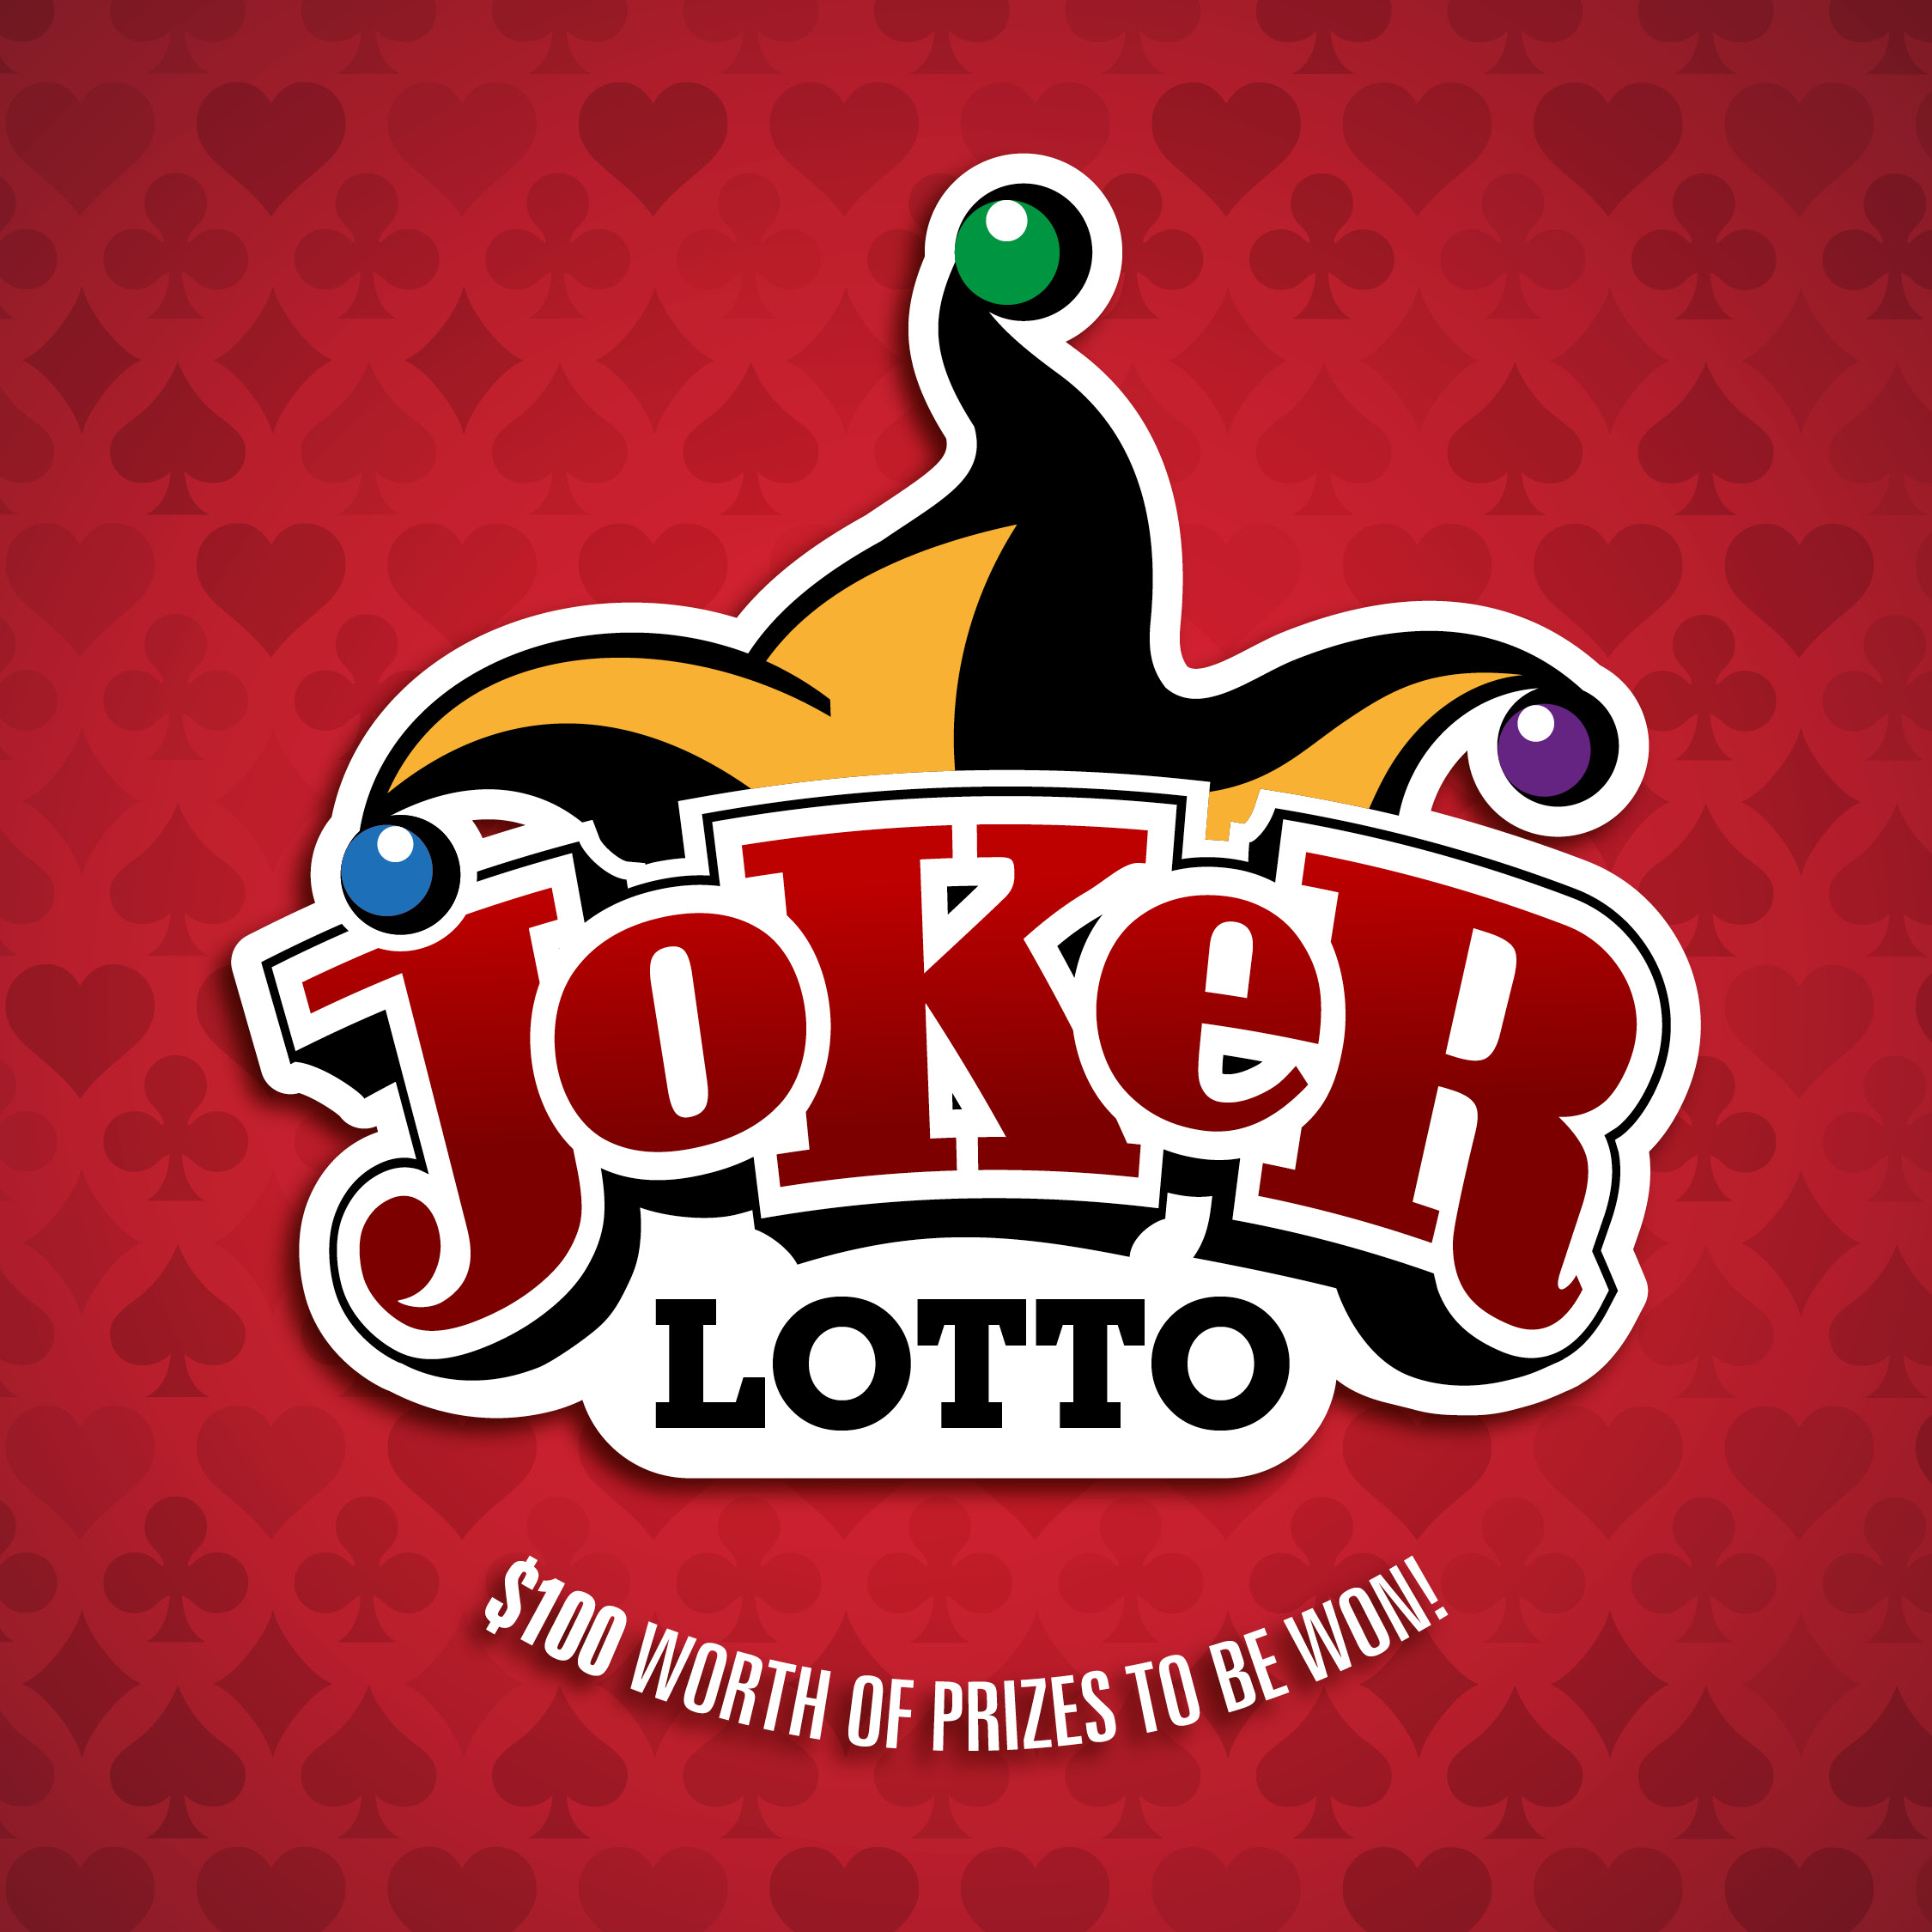 Ingenia Gardens Activate - Joker Lotto